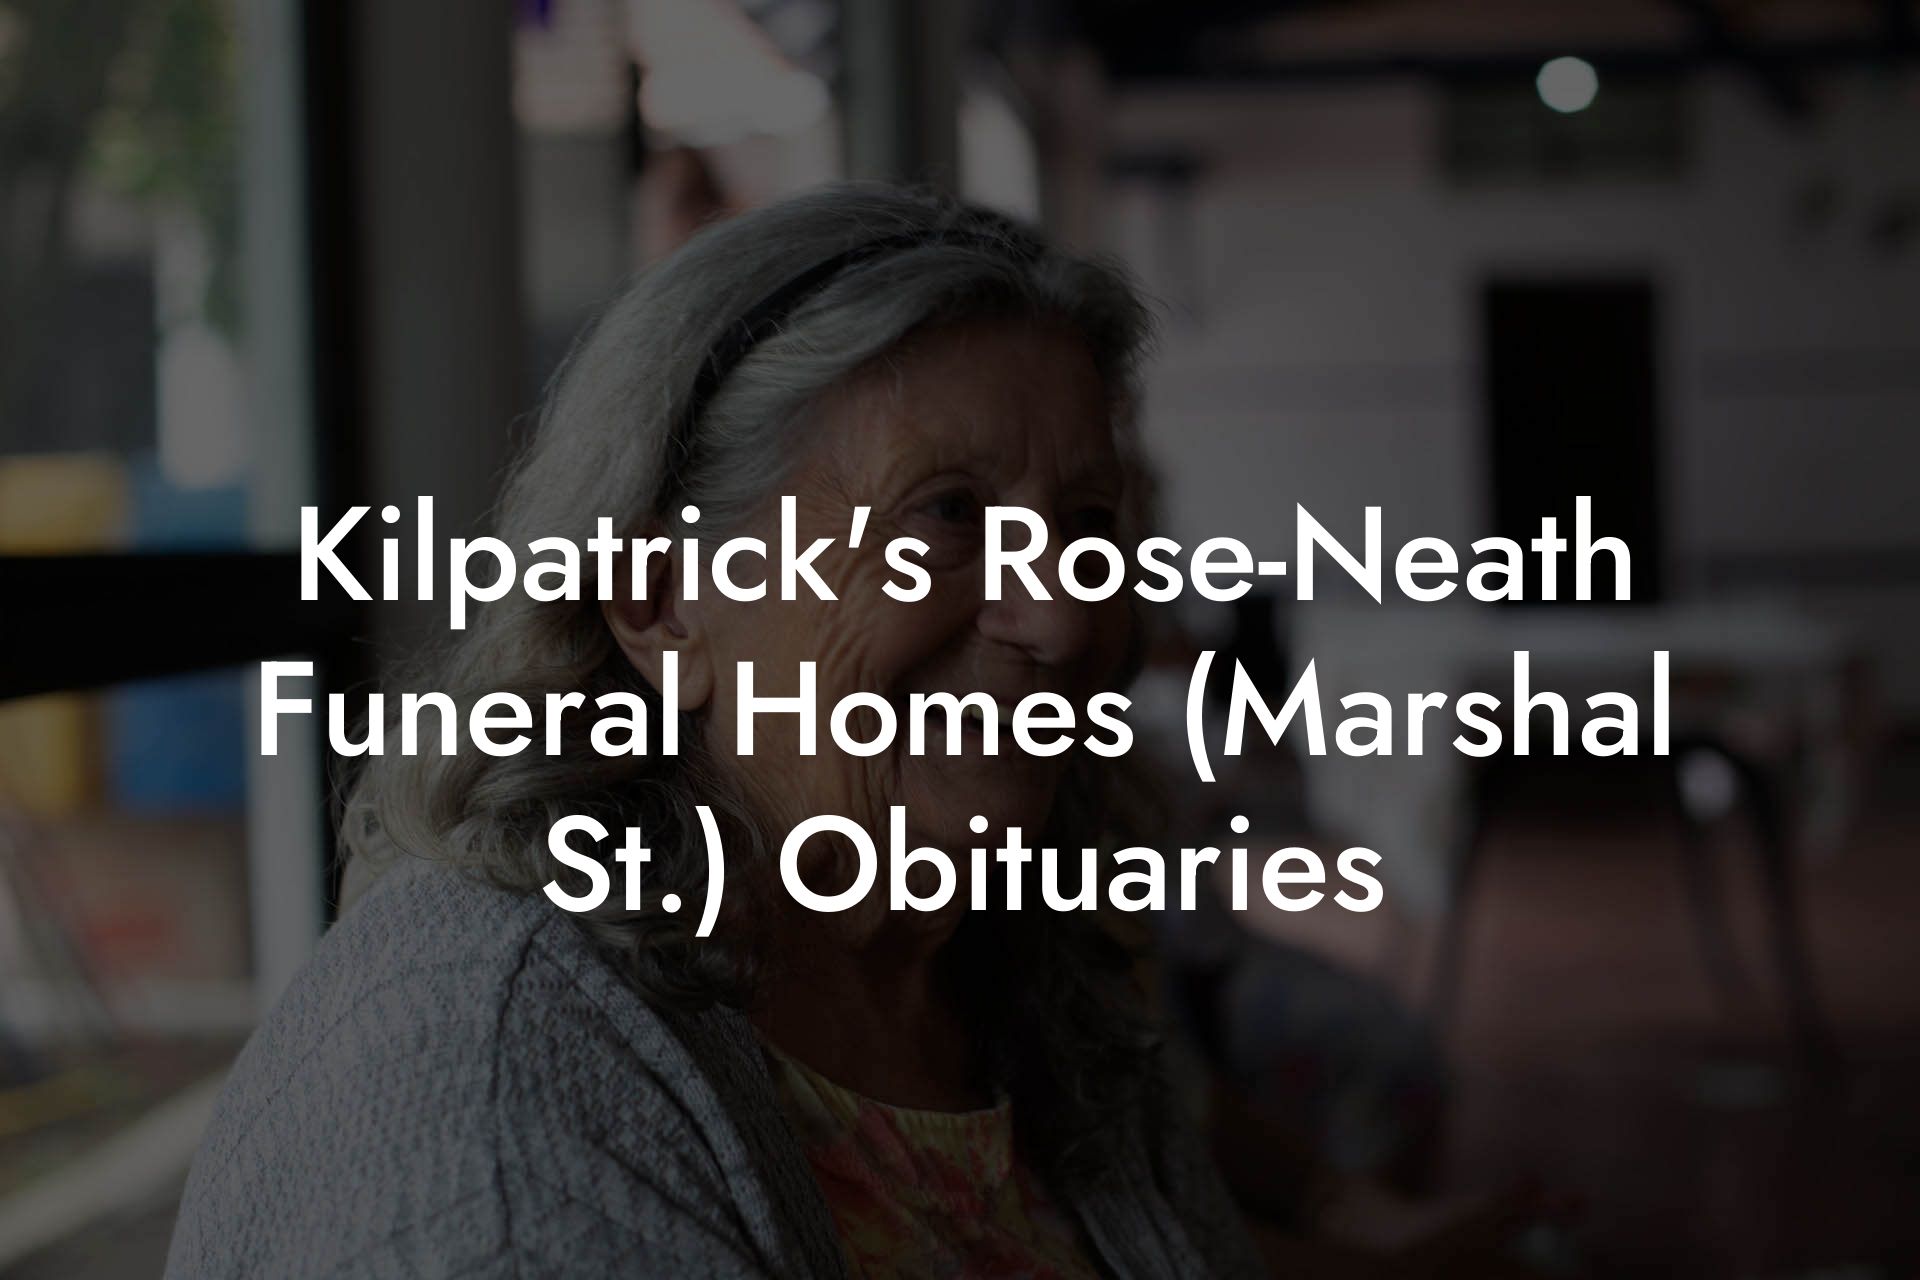 Kilpatrick's Rose-Neath Funeral Homes (Marshal St.) Obituaries